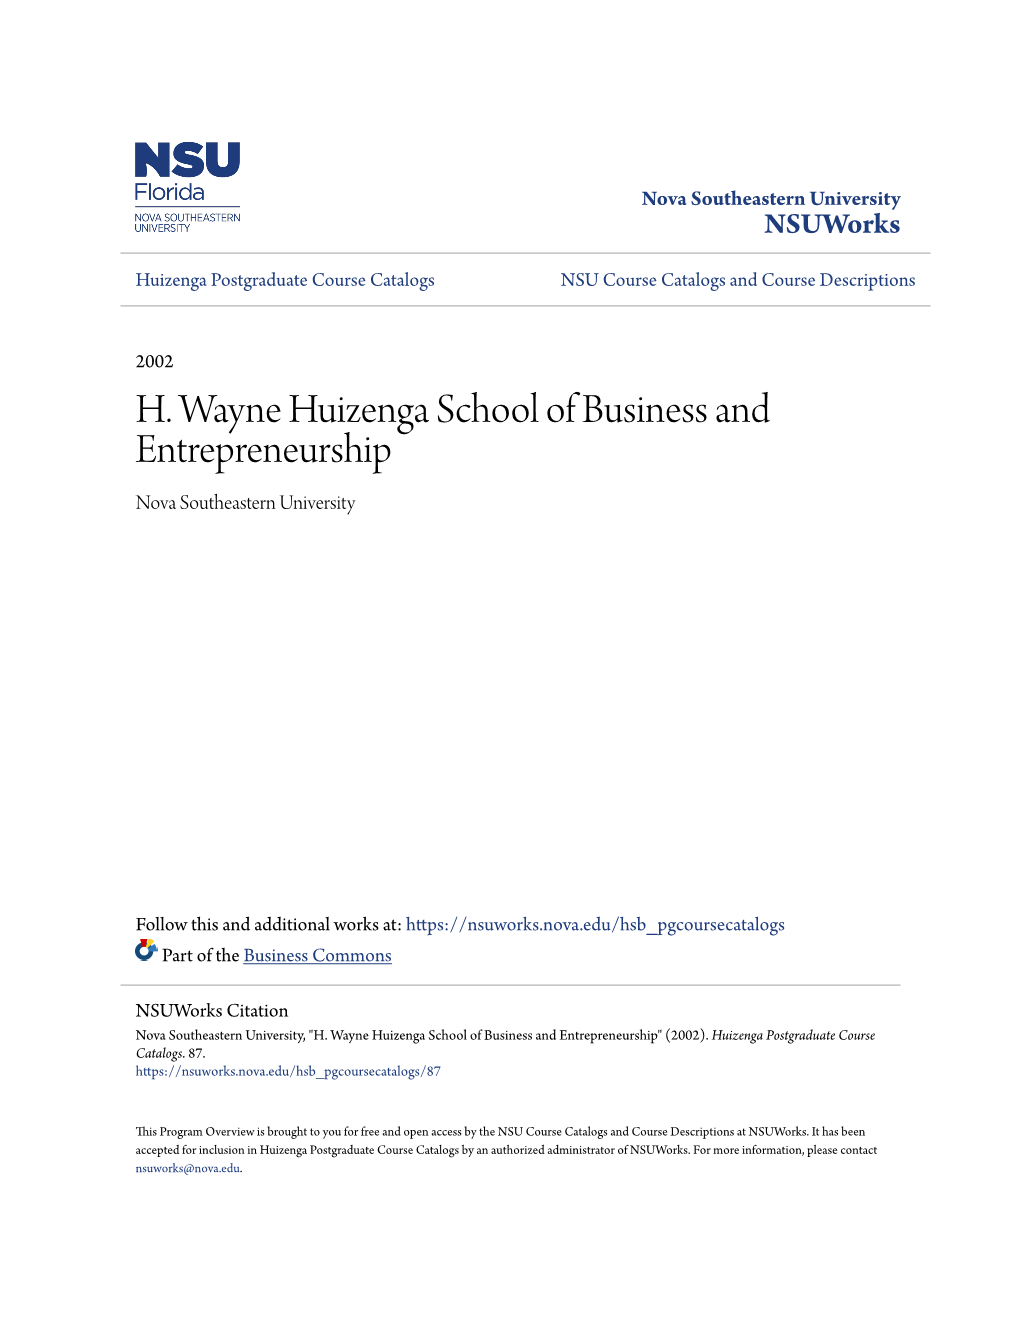 H. Wayne Huizenga School of Business and Entrepreneurship Nova Southeastern University